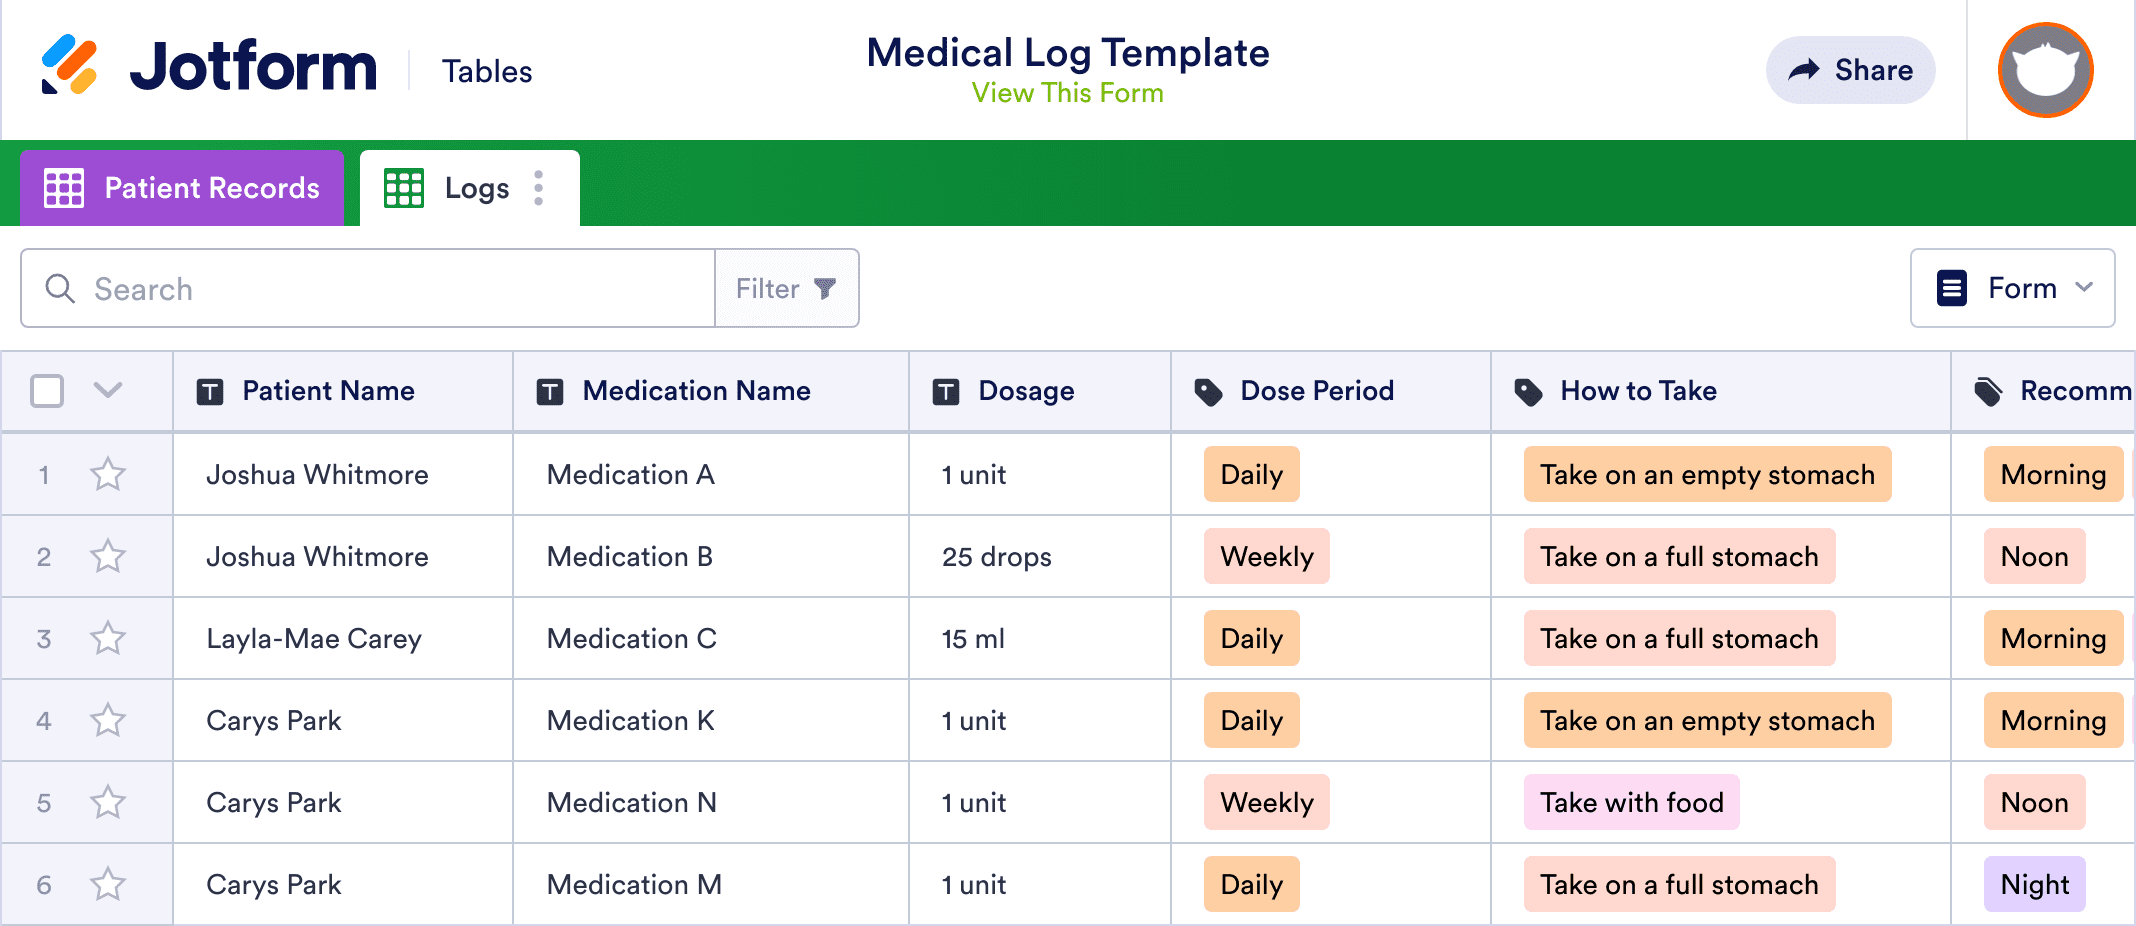 Medical Log Template | Jotform Tables